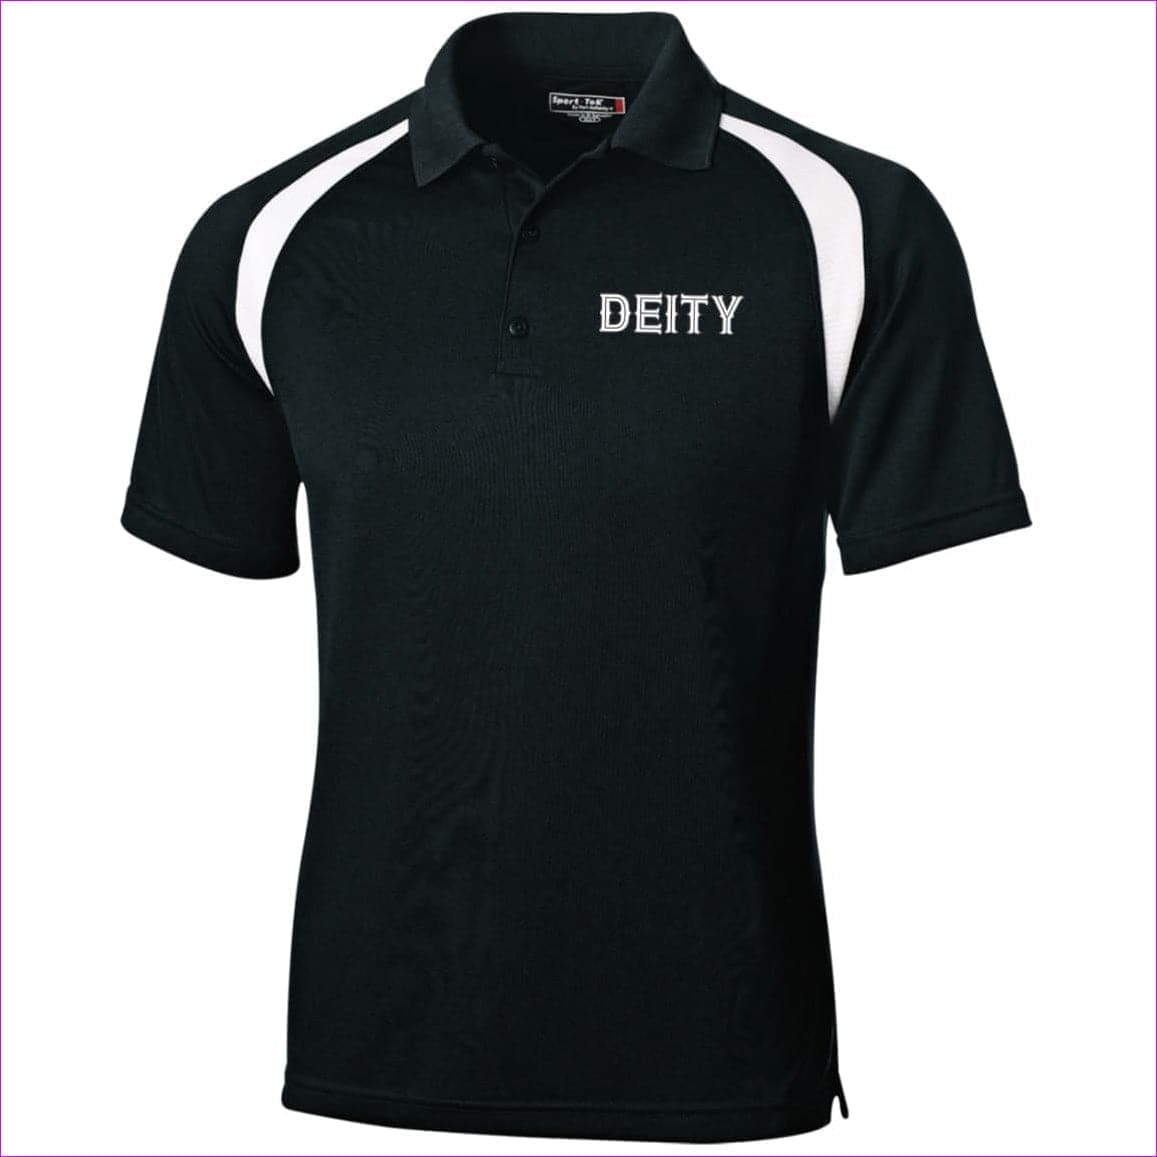 Black White - Deity Moisture-Wicking Golf Shirt - Mens Polo Shirts at TFC&H Co.